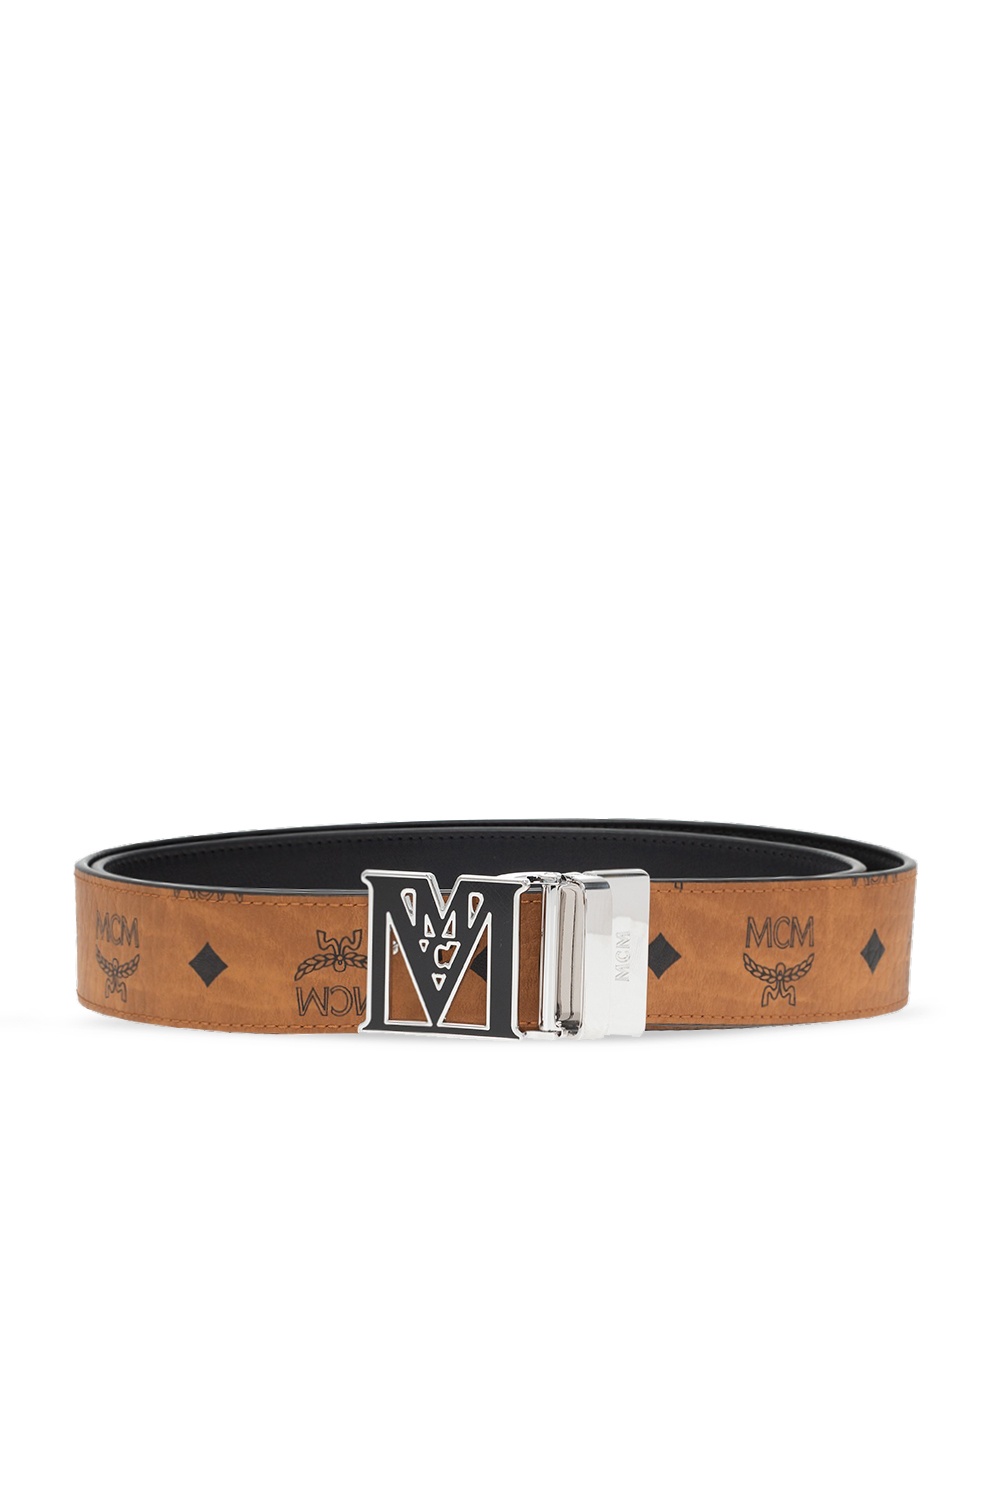 MCM Logo belt | Men's Accessories | StclaircomoShops